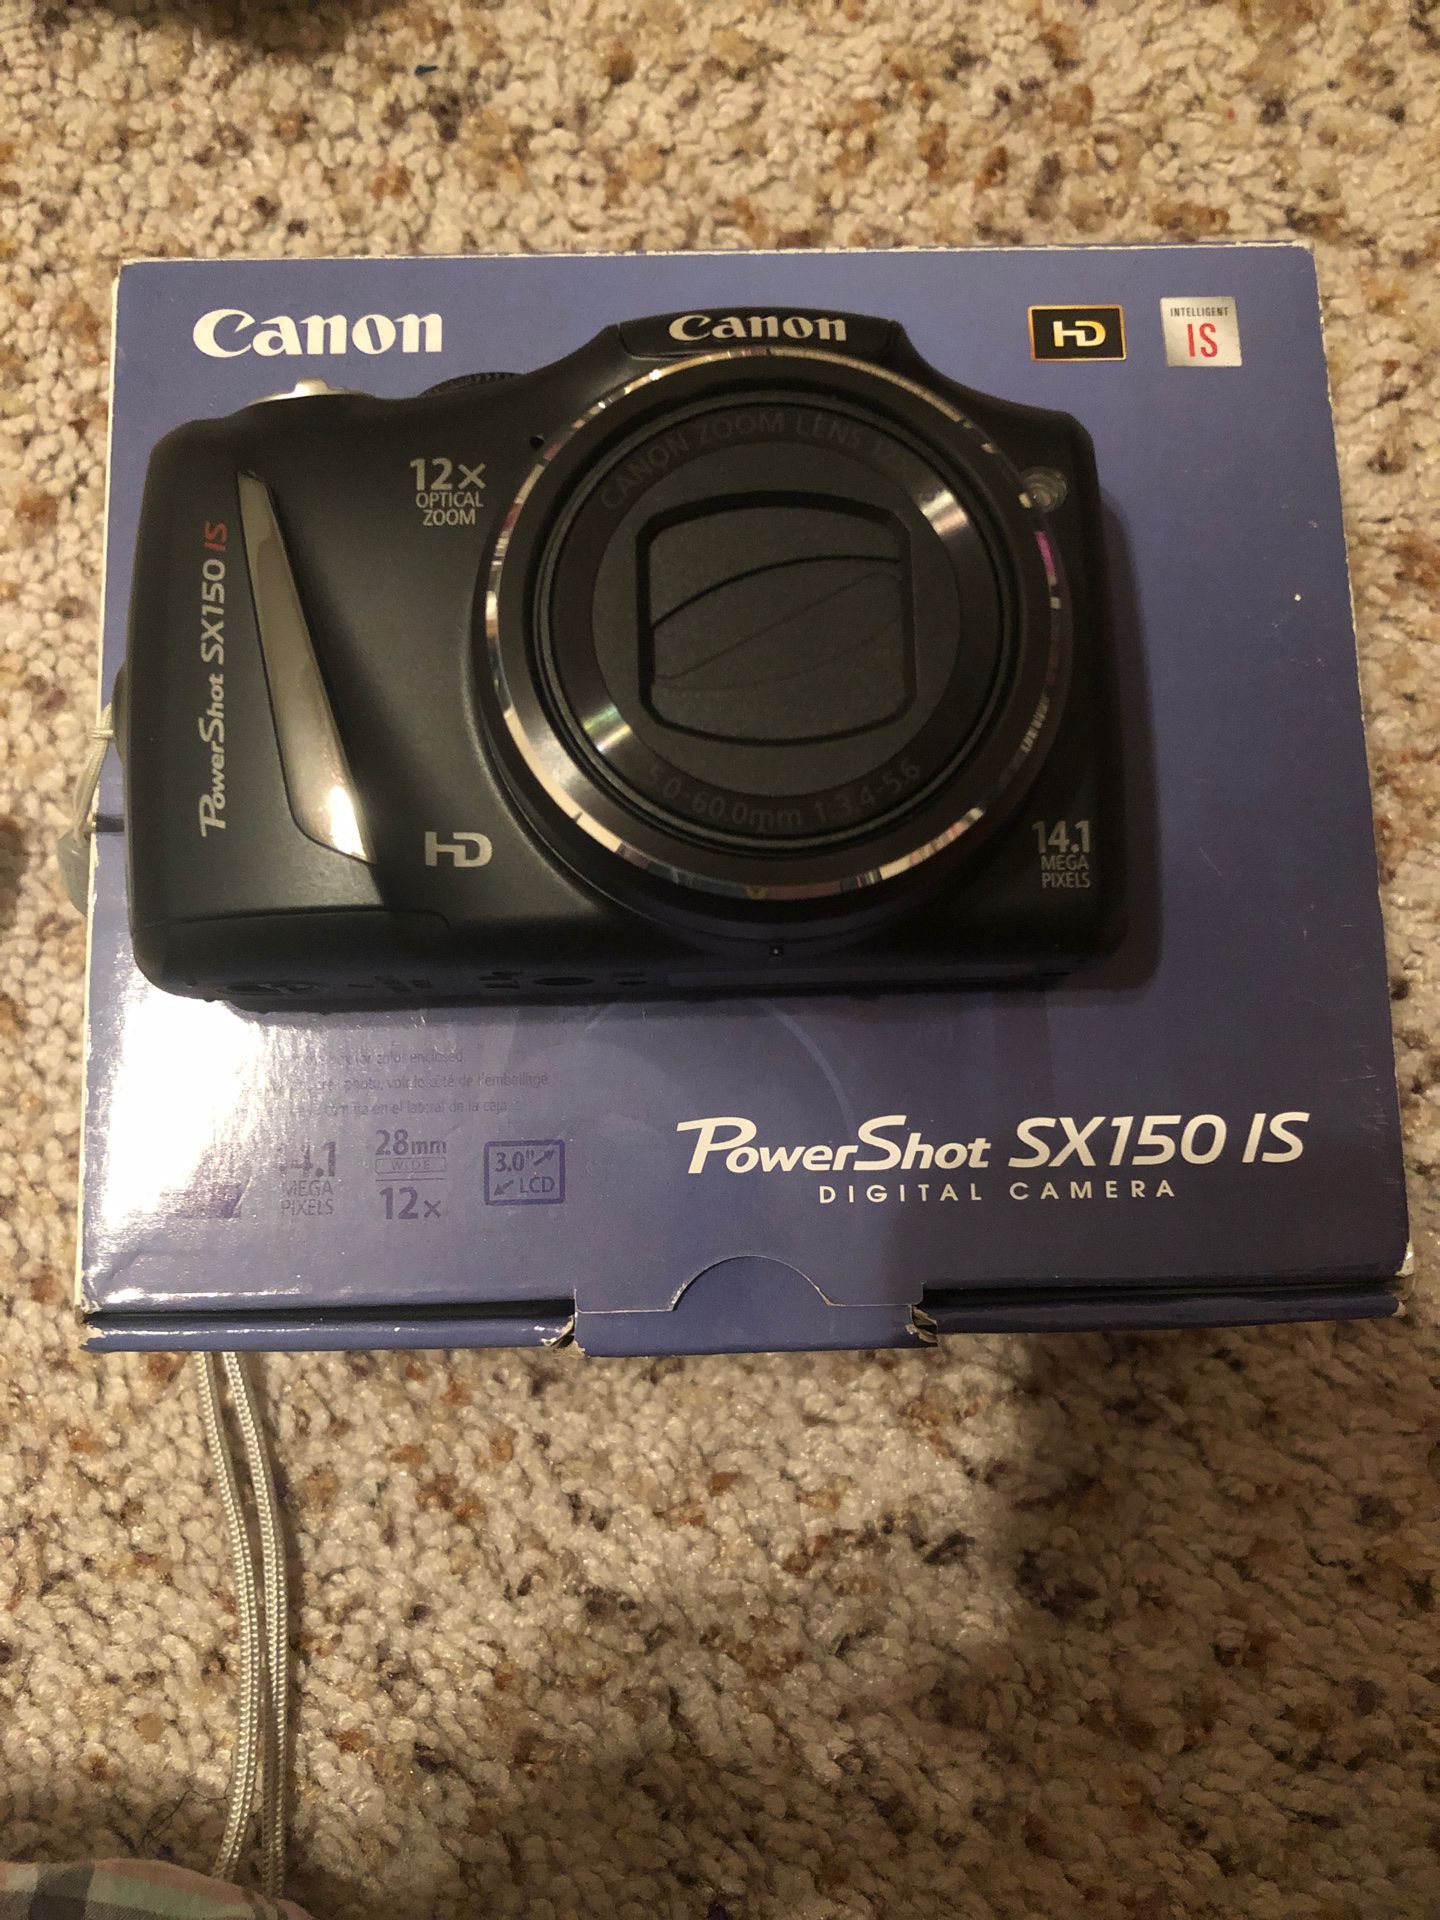 Canon Power Shot SX150 IS digital camera